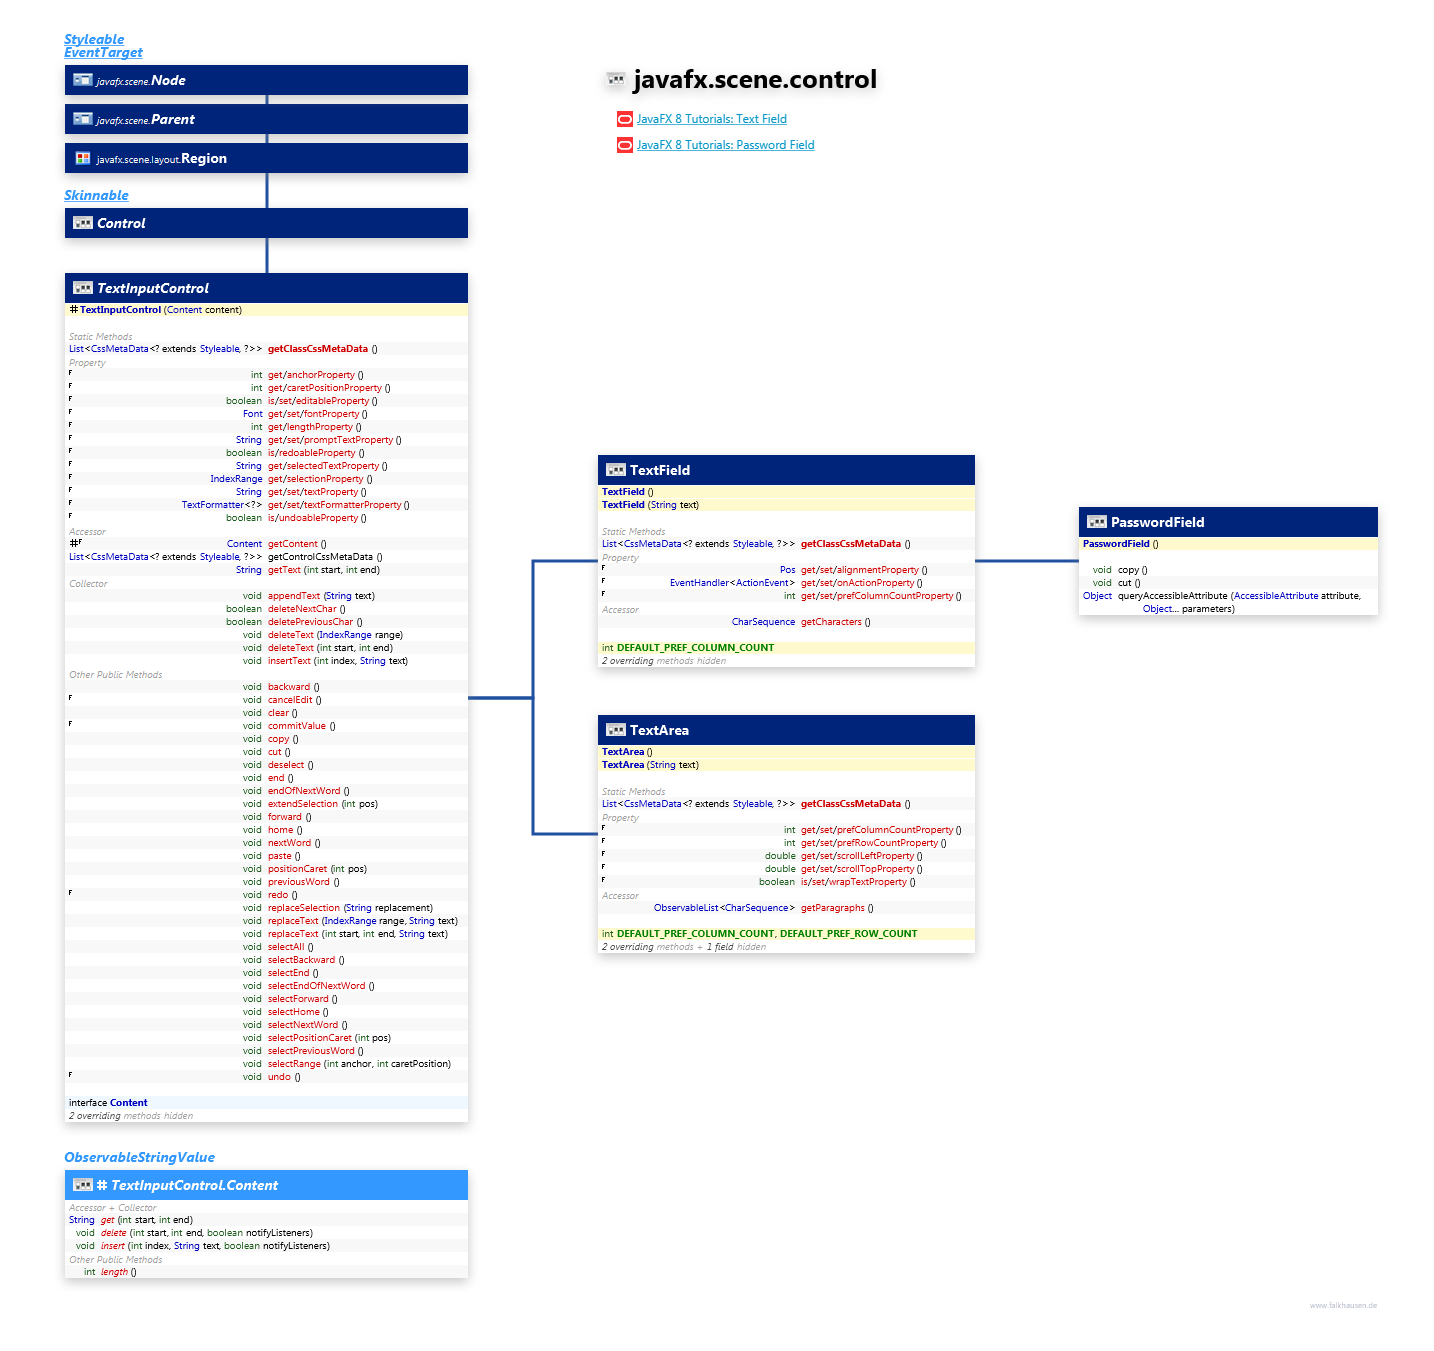 javafx.scene.control TextInputControl class diagram and api documentation for JavaFX 8